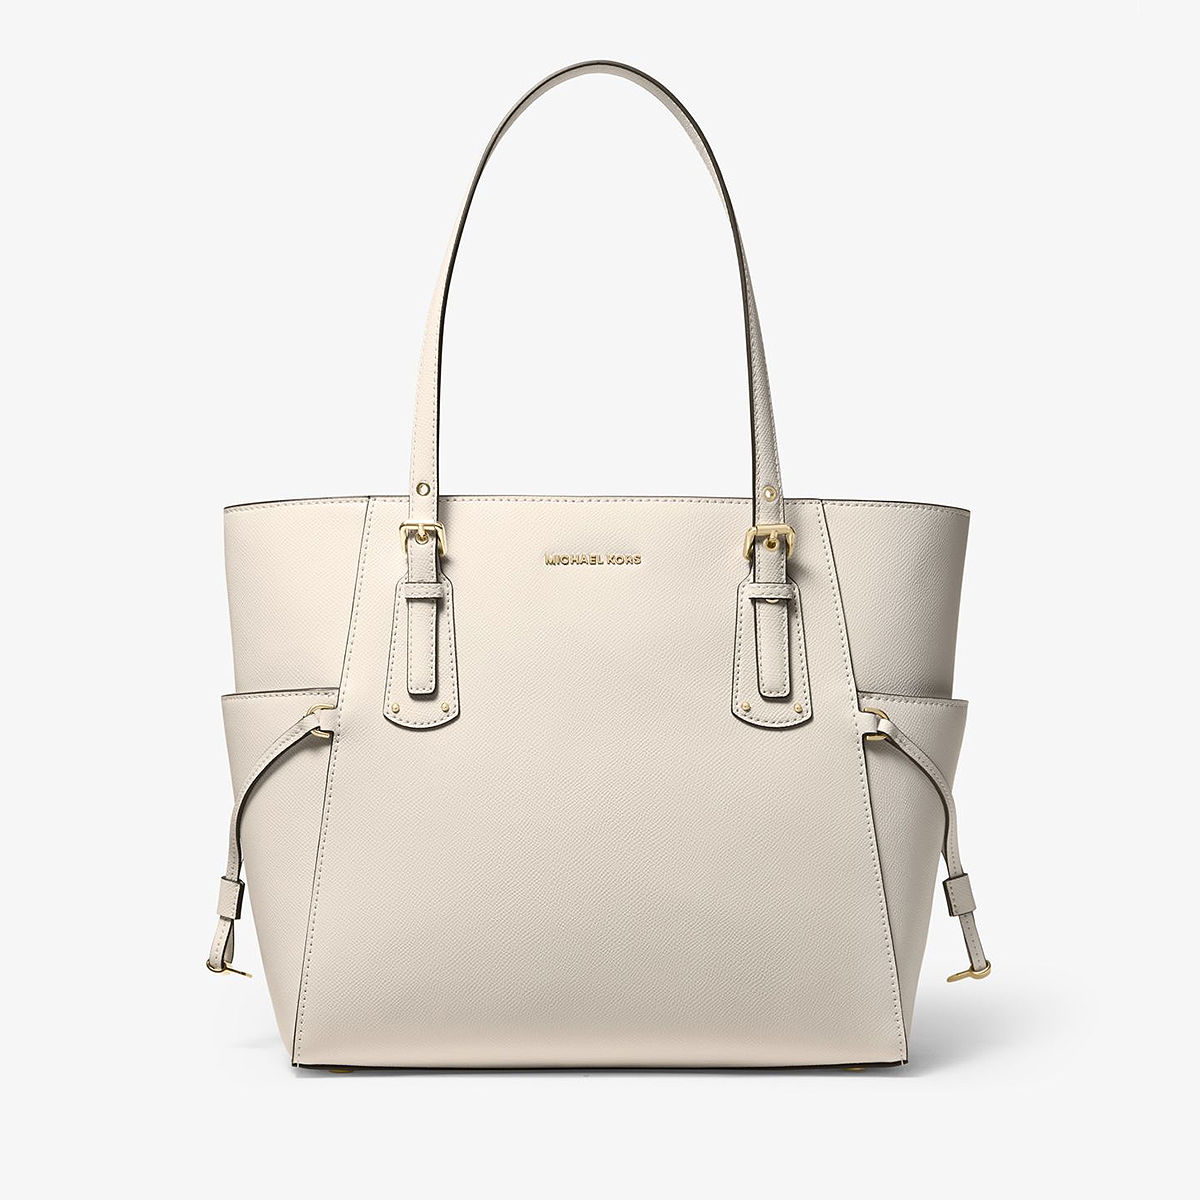 Designer handbags sale: Save on Michael Kors leather totes